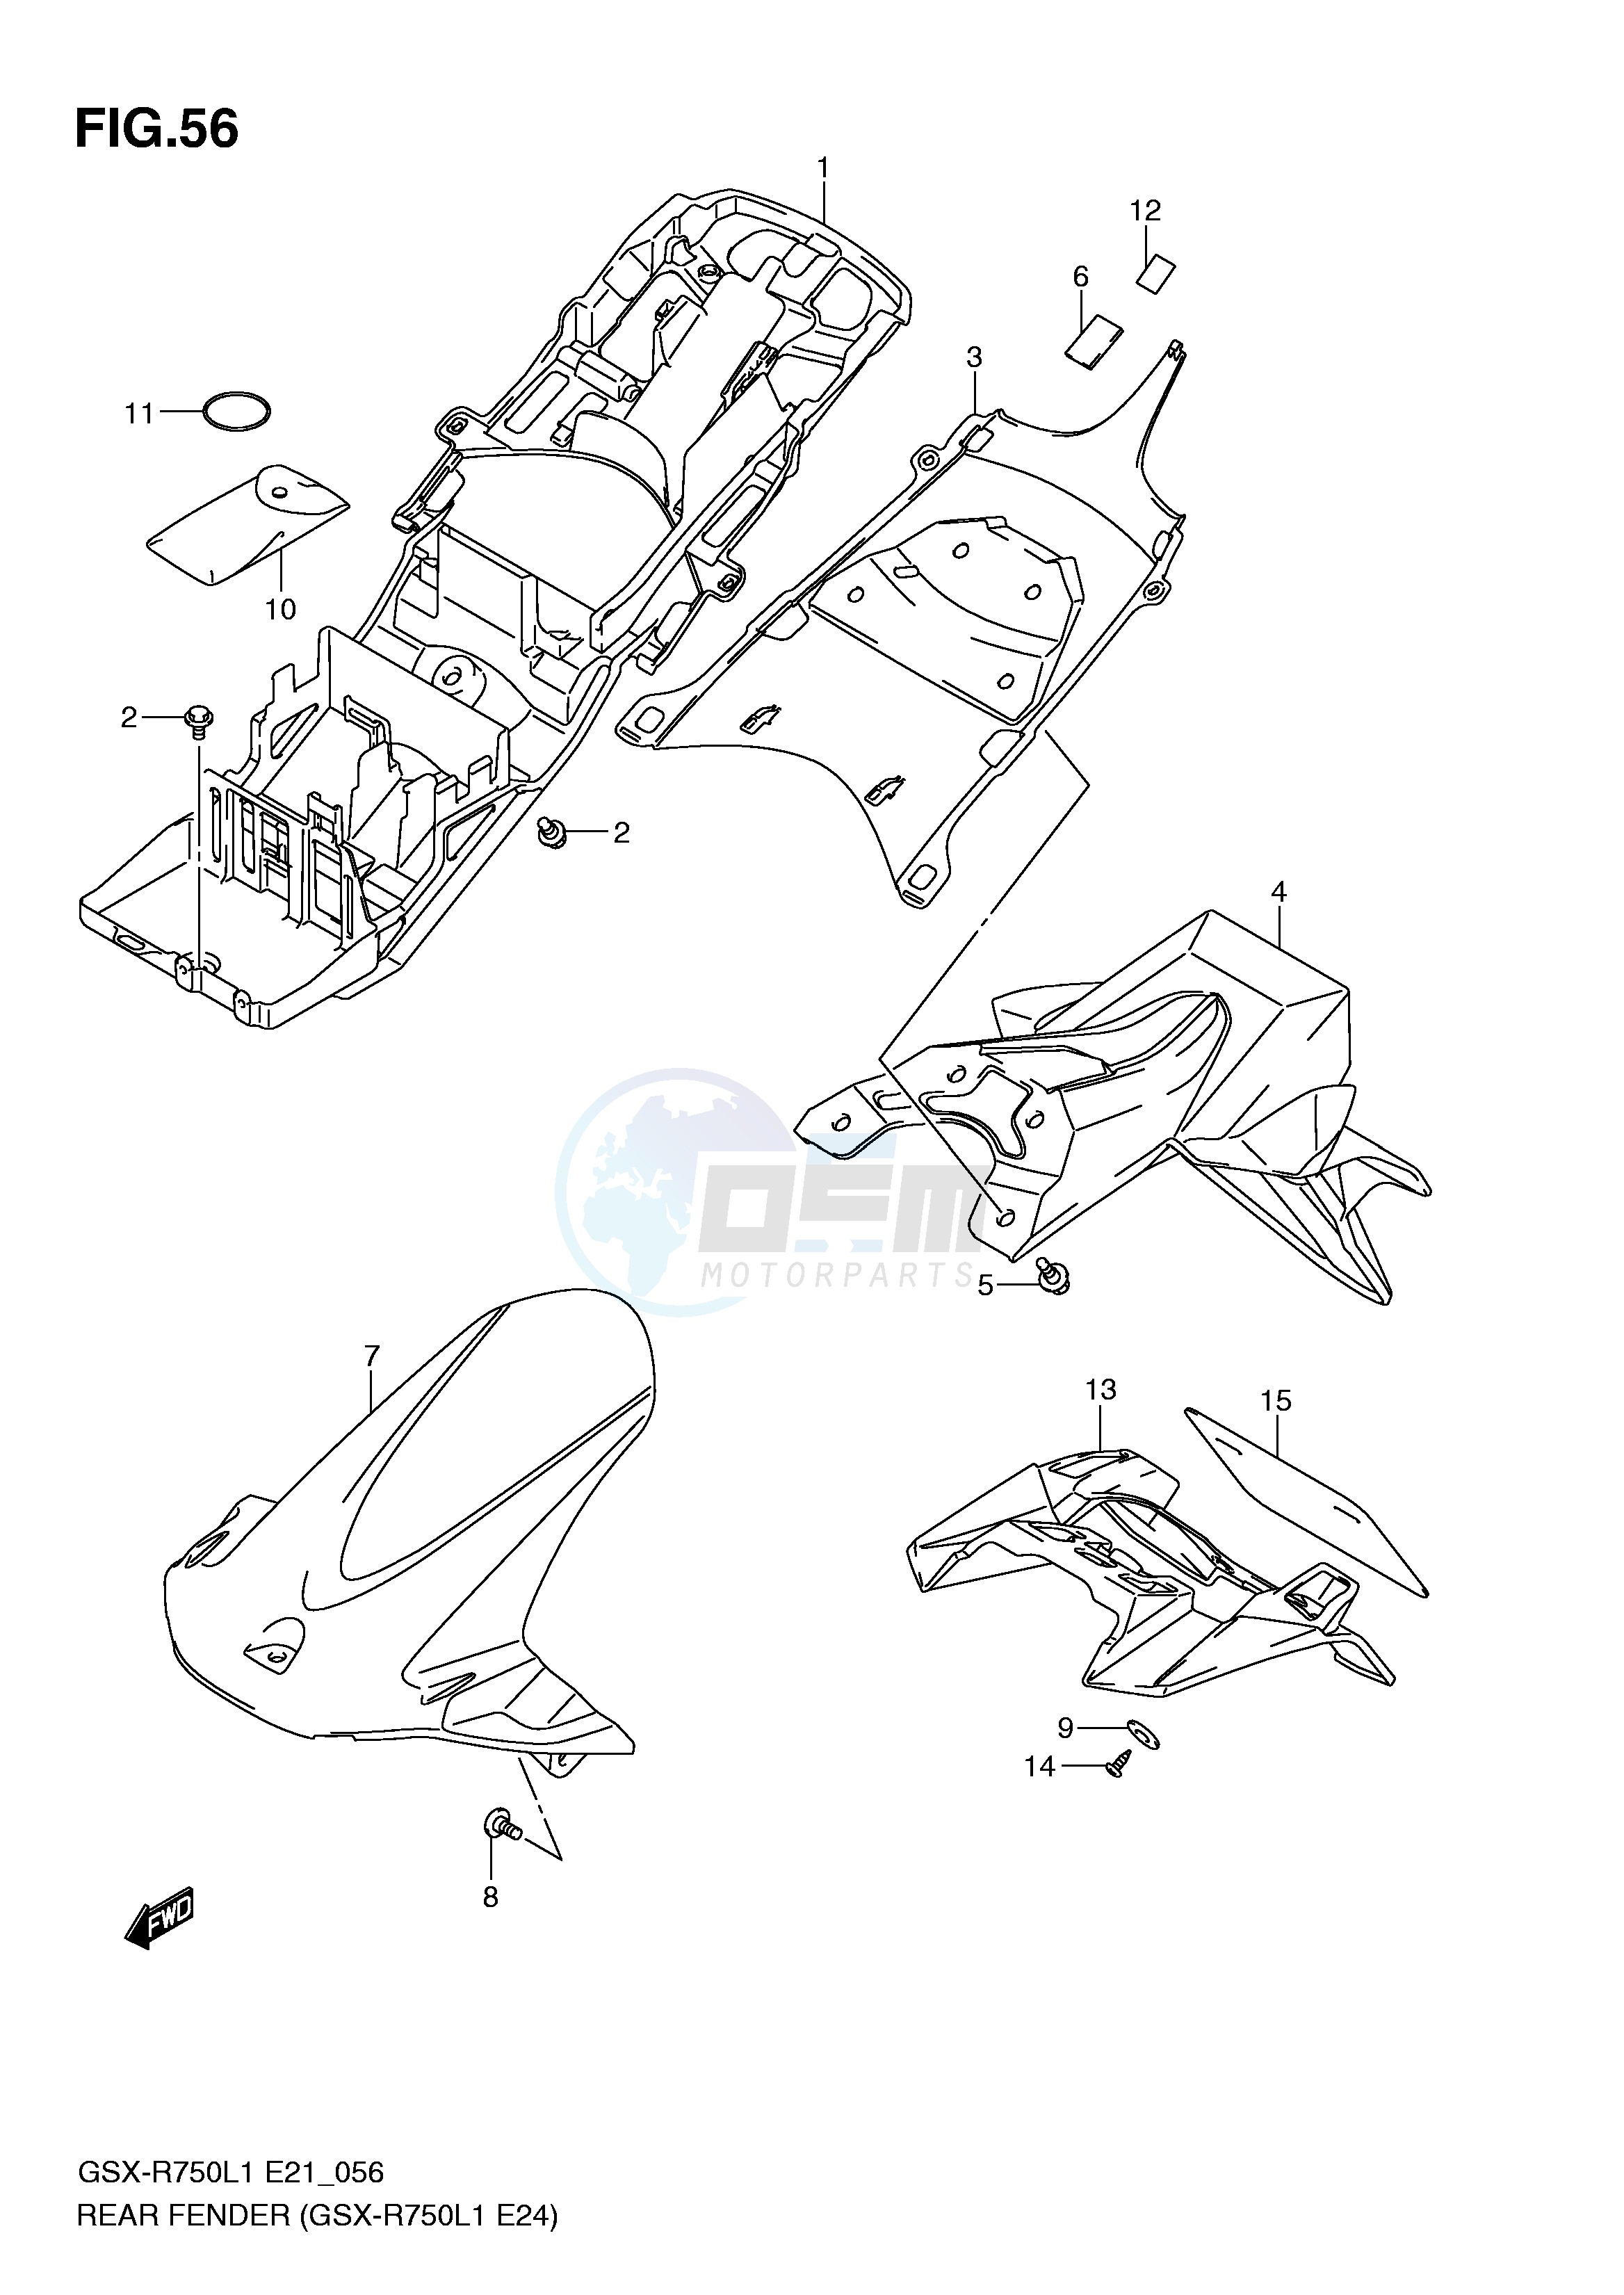 REAR FENDER (GSX-R750L1 E24) blueprint